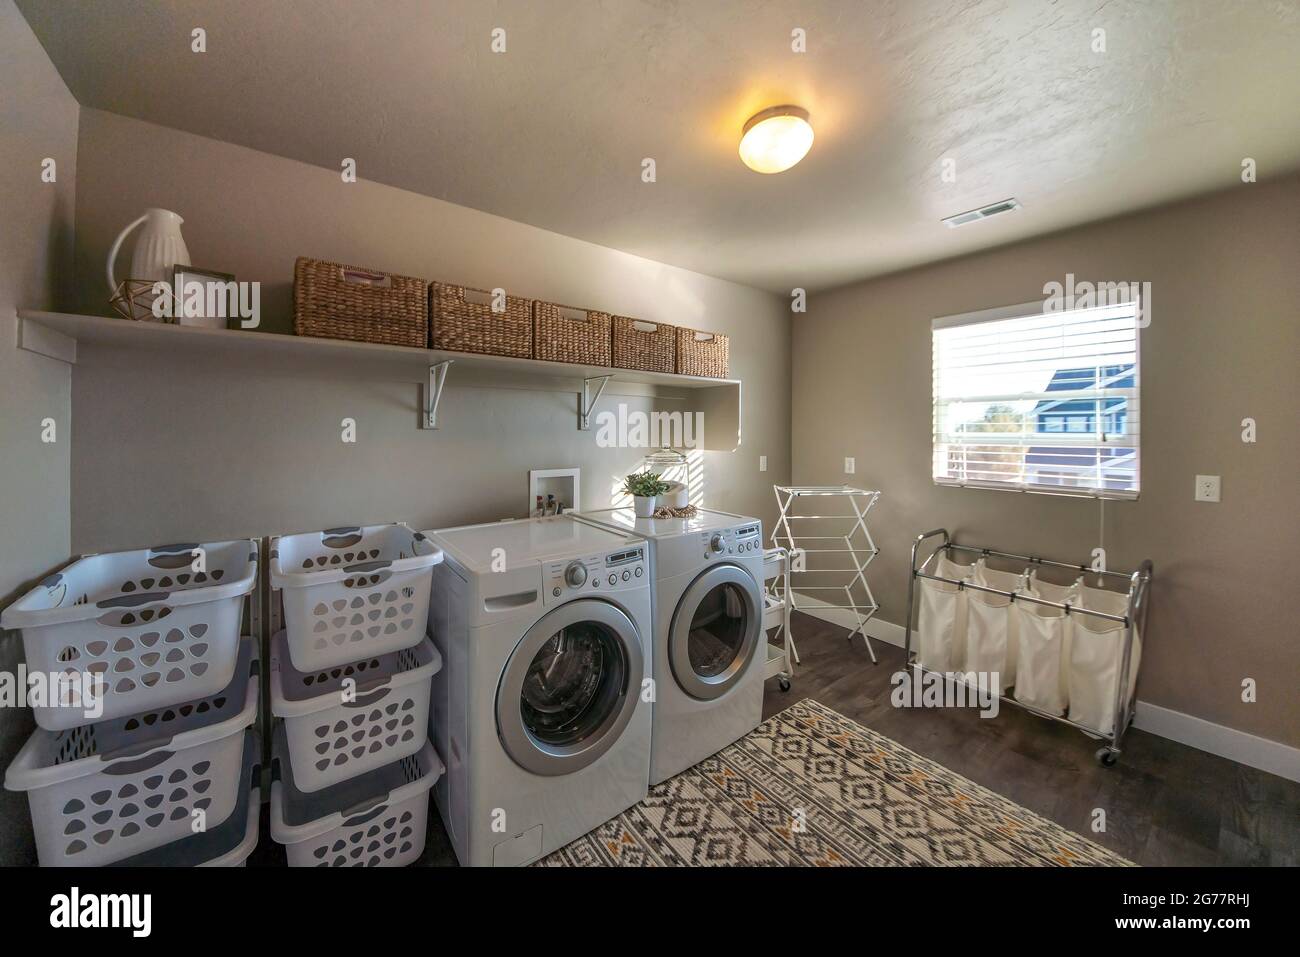 https://c8.alamy.com/comp/2G77RHJ/spacious-laundry-room-with-window-and-lots-of-storage-baskets-2G77RHJ.jpg